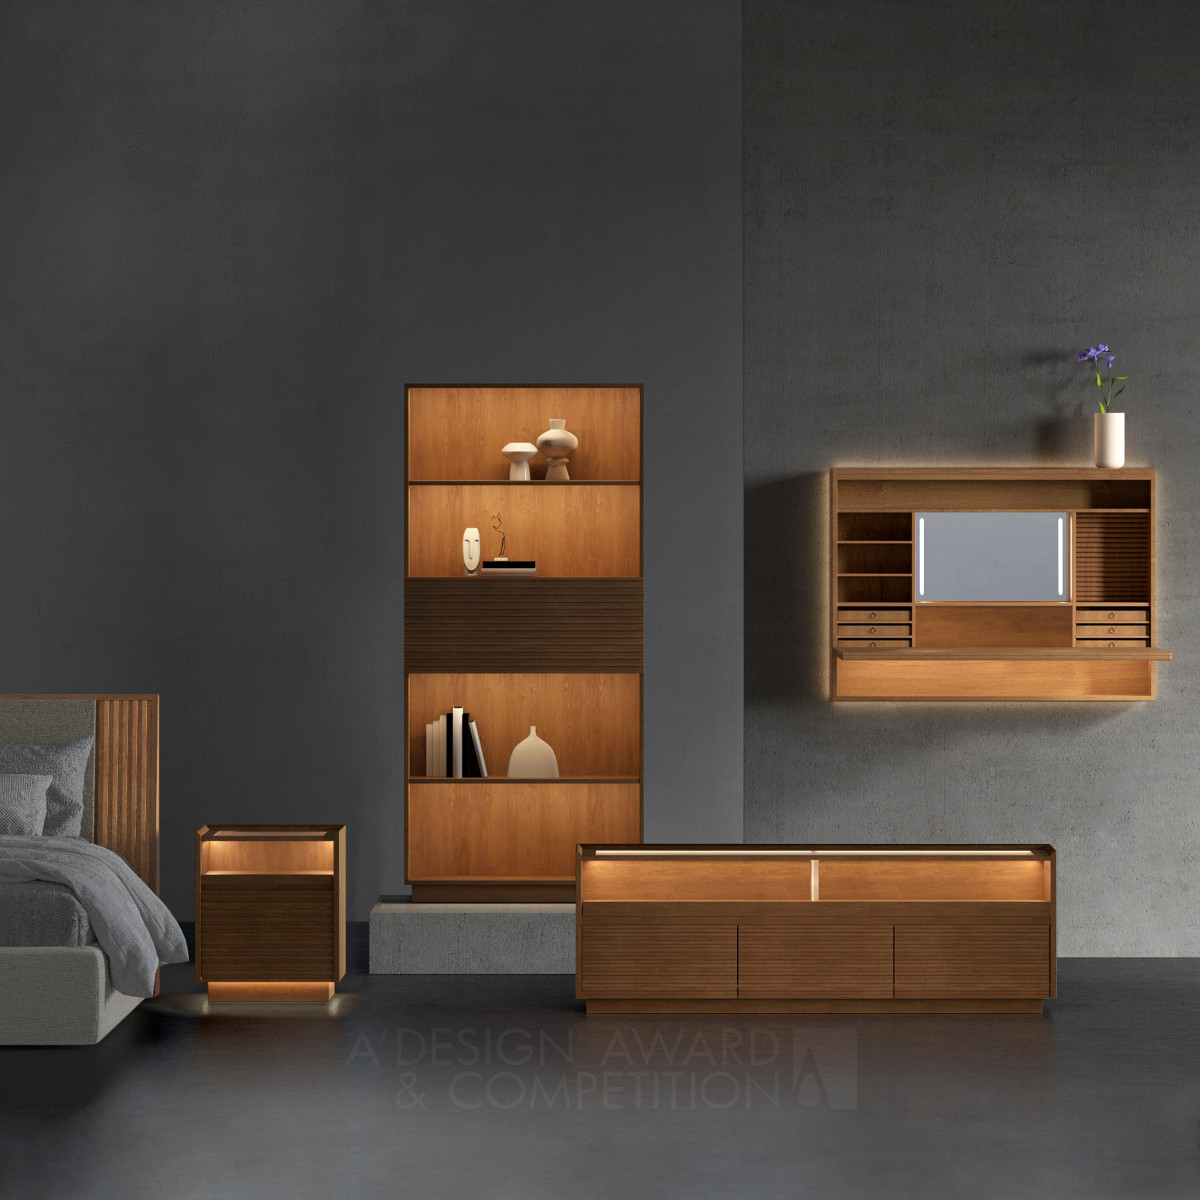 Ziel Home Furnishing Technology Co., Ltd wins Bronze at the prestigious A' Furniture Design Award with Kenji Light Furniture.